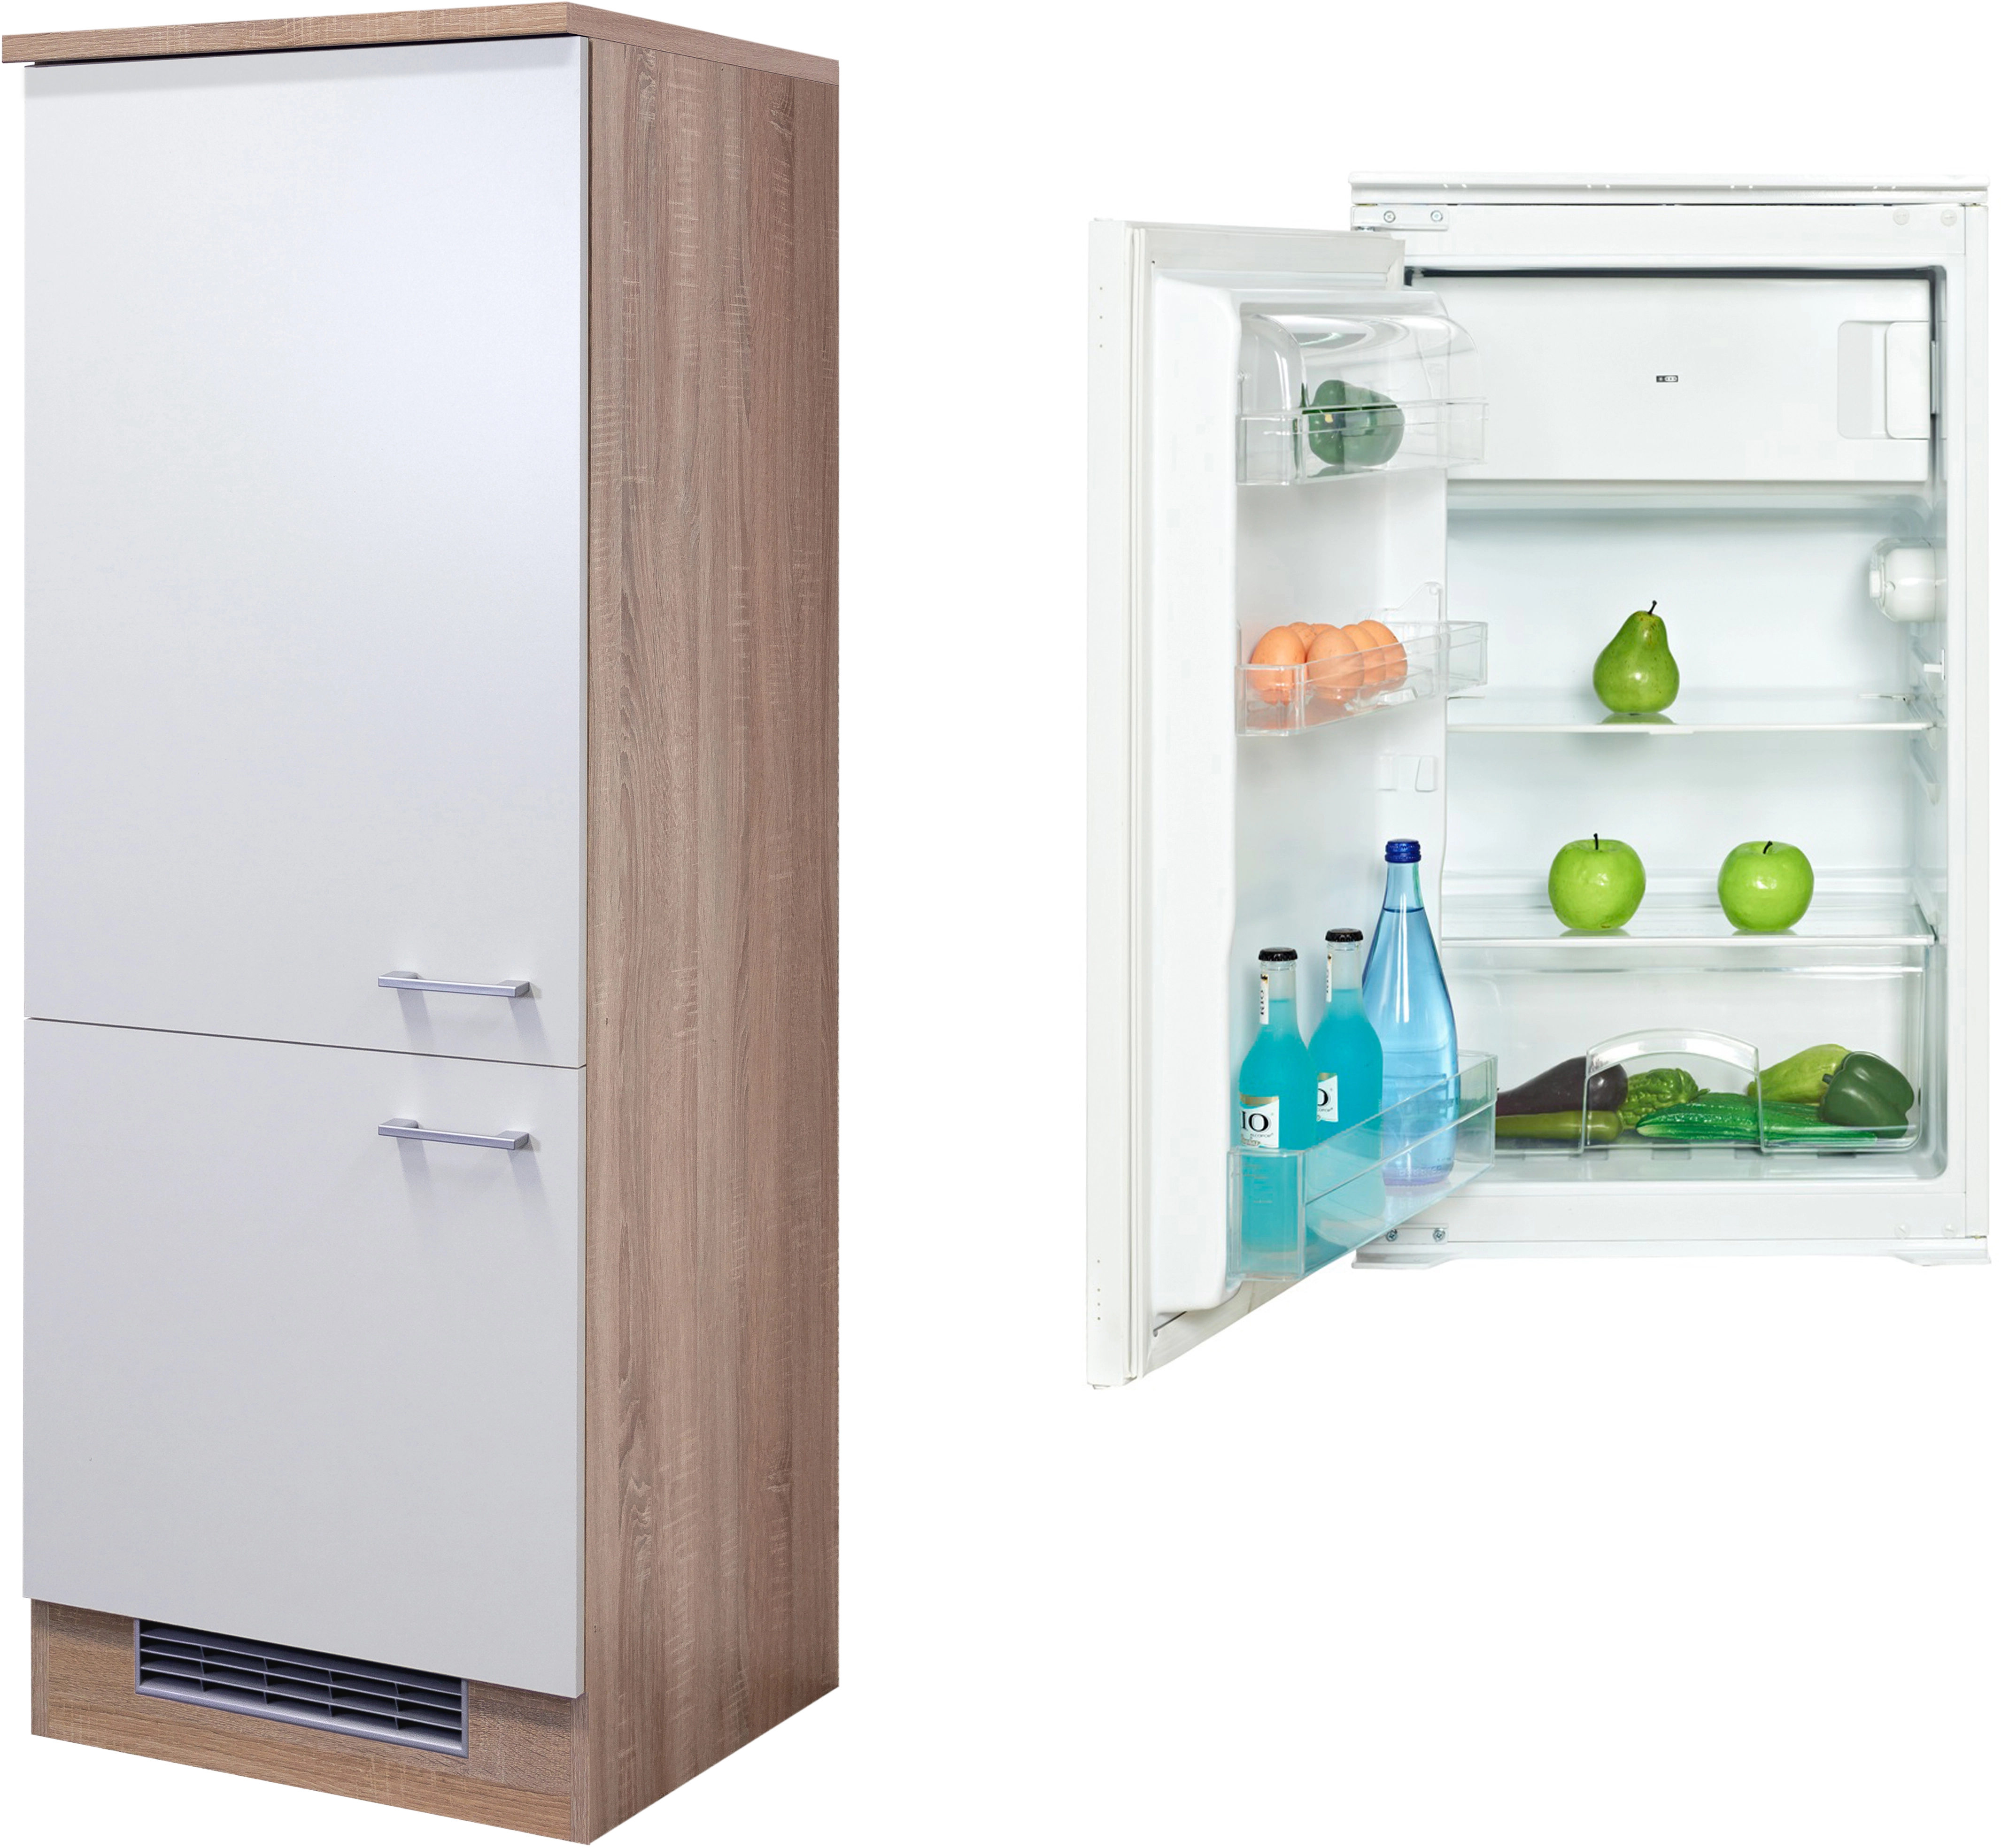 OBI Kühlschrank KS Florida kaufen bei Classic PKM EB mit Flex-Well Kühlschrank-Umbau 120.4A+